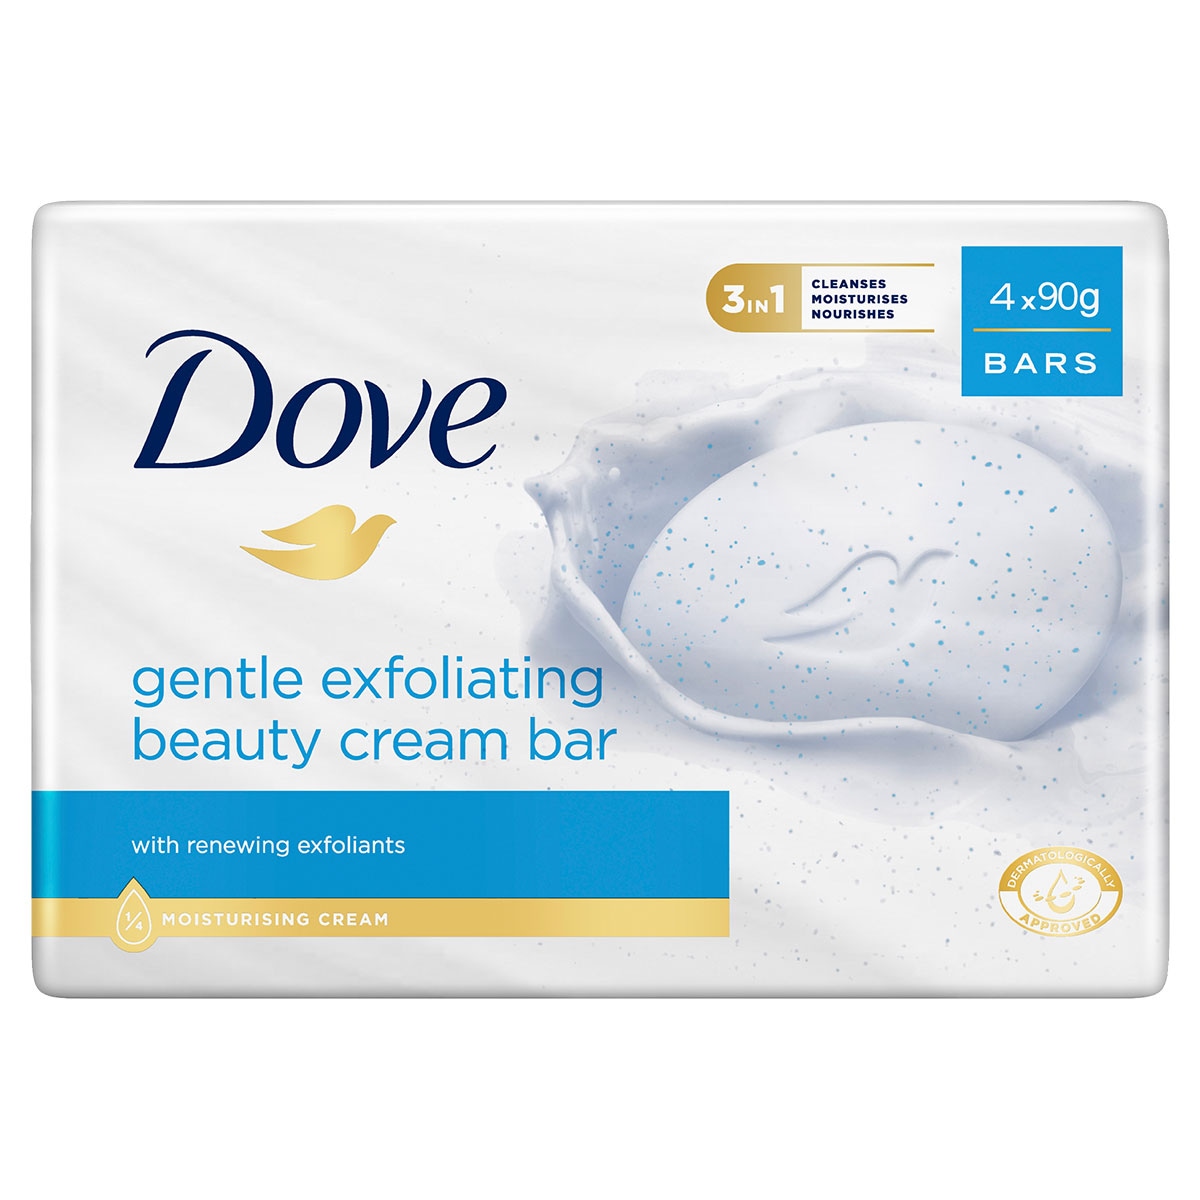 Dove Gentle Exfoliating Beauty Cream Bar 90g x 4 Bars